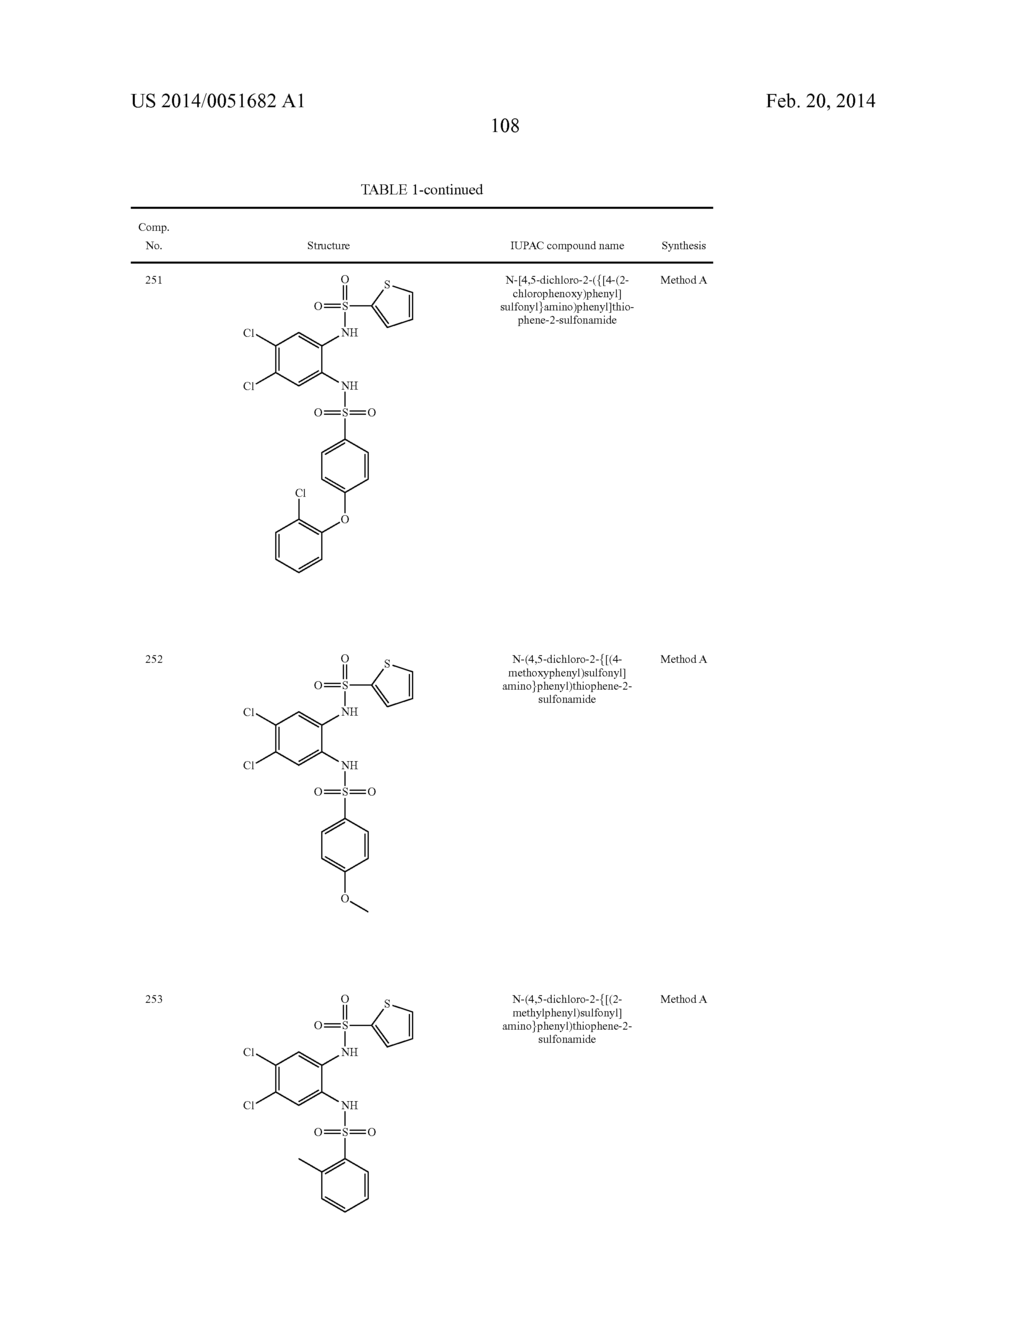 NOVEL 1,2- BIS-SULFONAMIDE DERIVATIVES AS CHEMOKINE RECEPTOR MODULATORS - diagram, schematic, and image 109